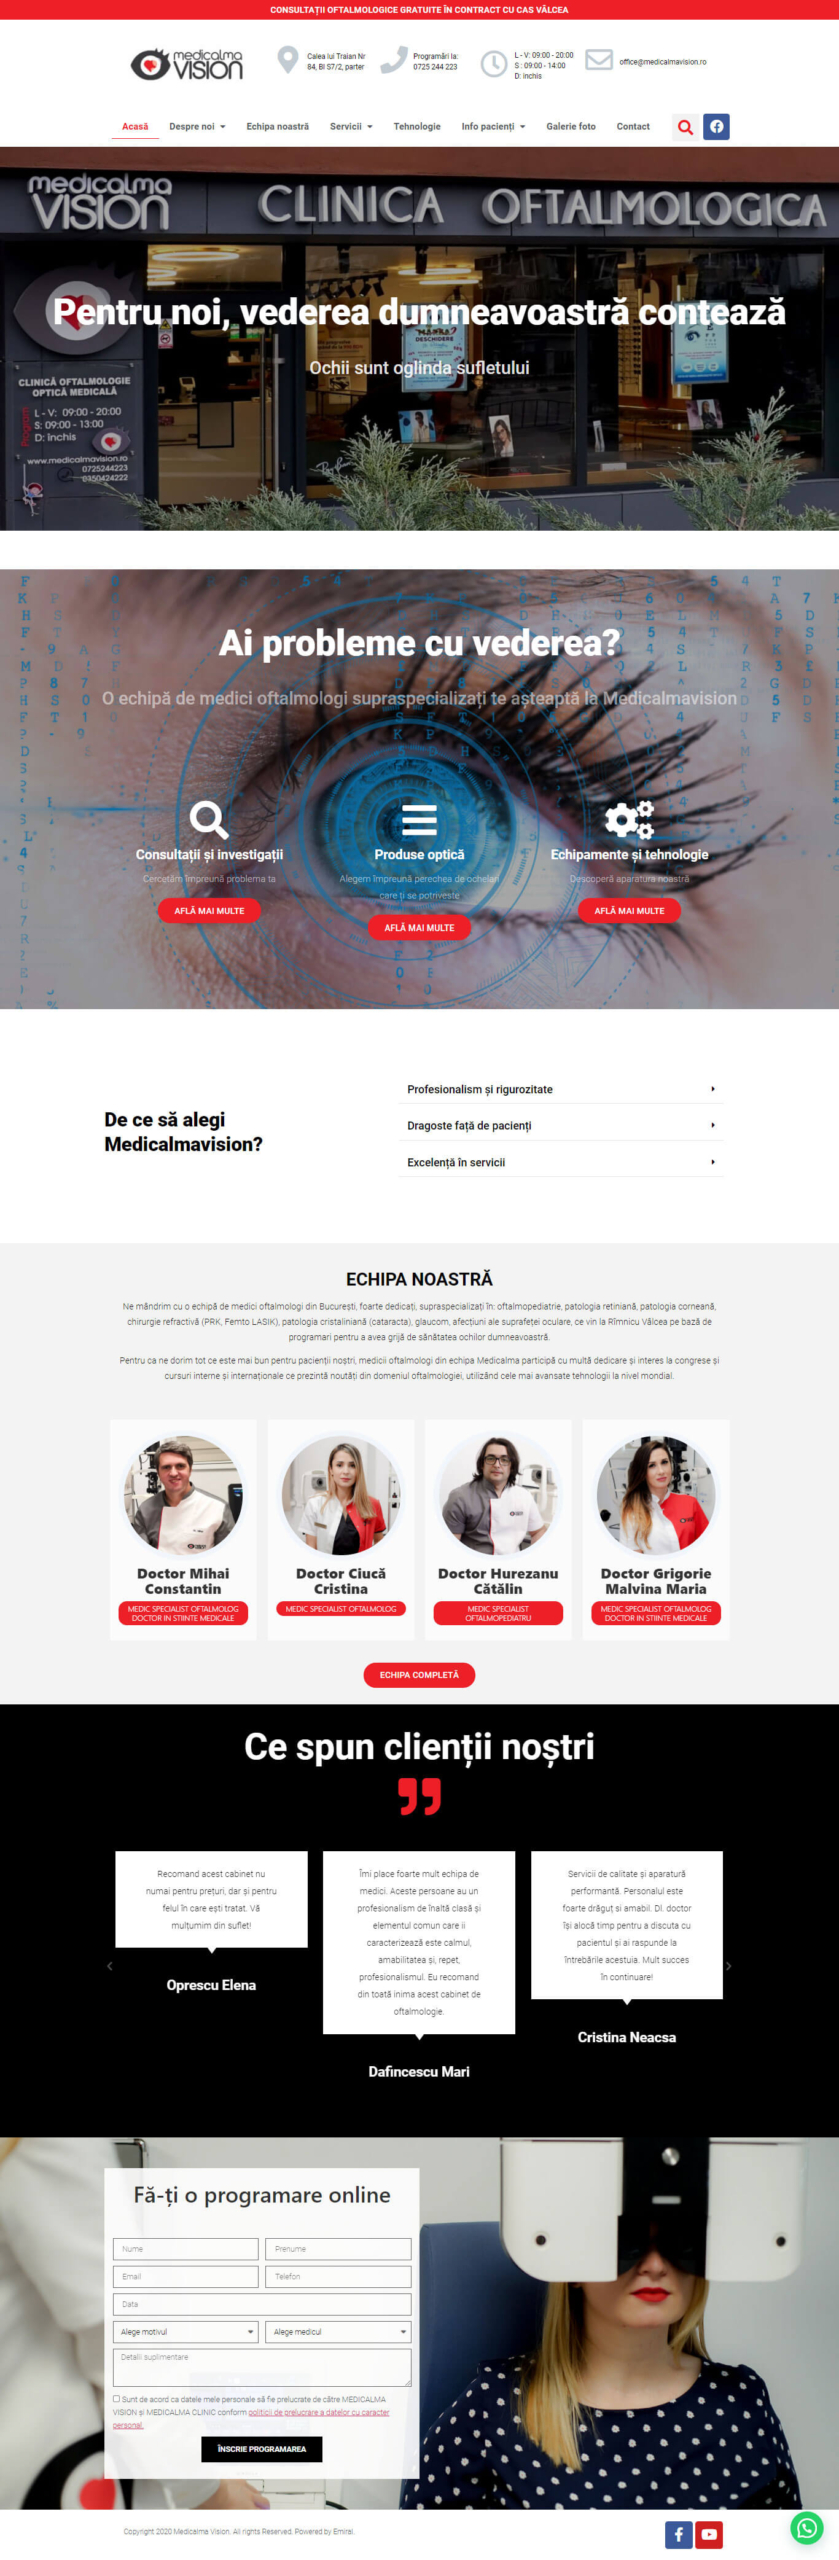 Website Medicalma Vision